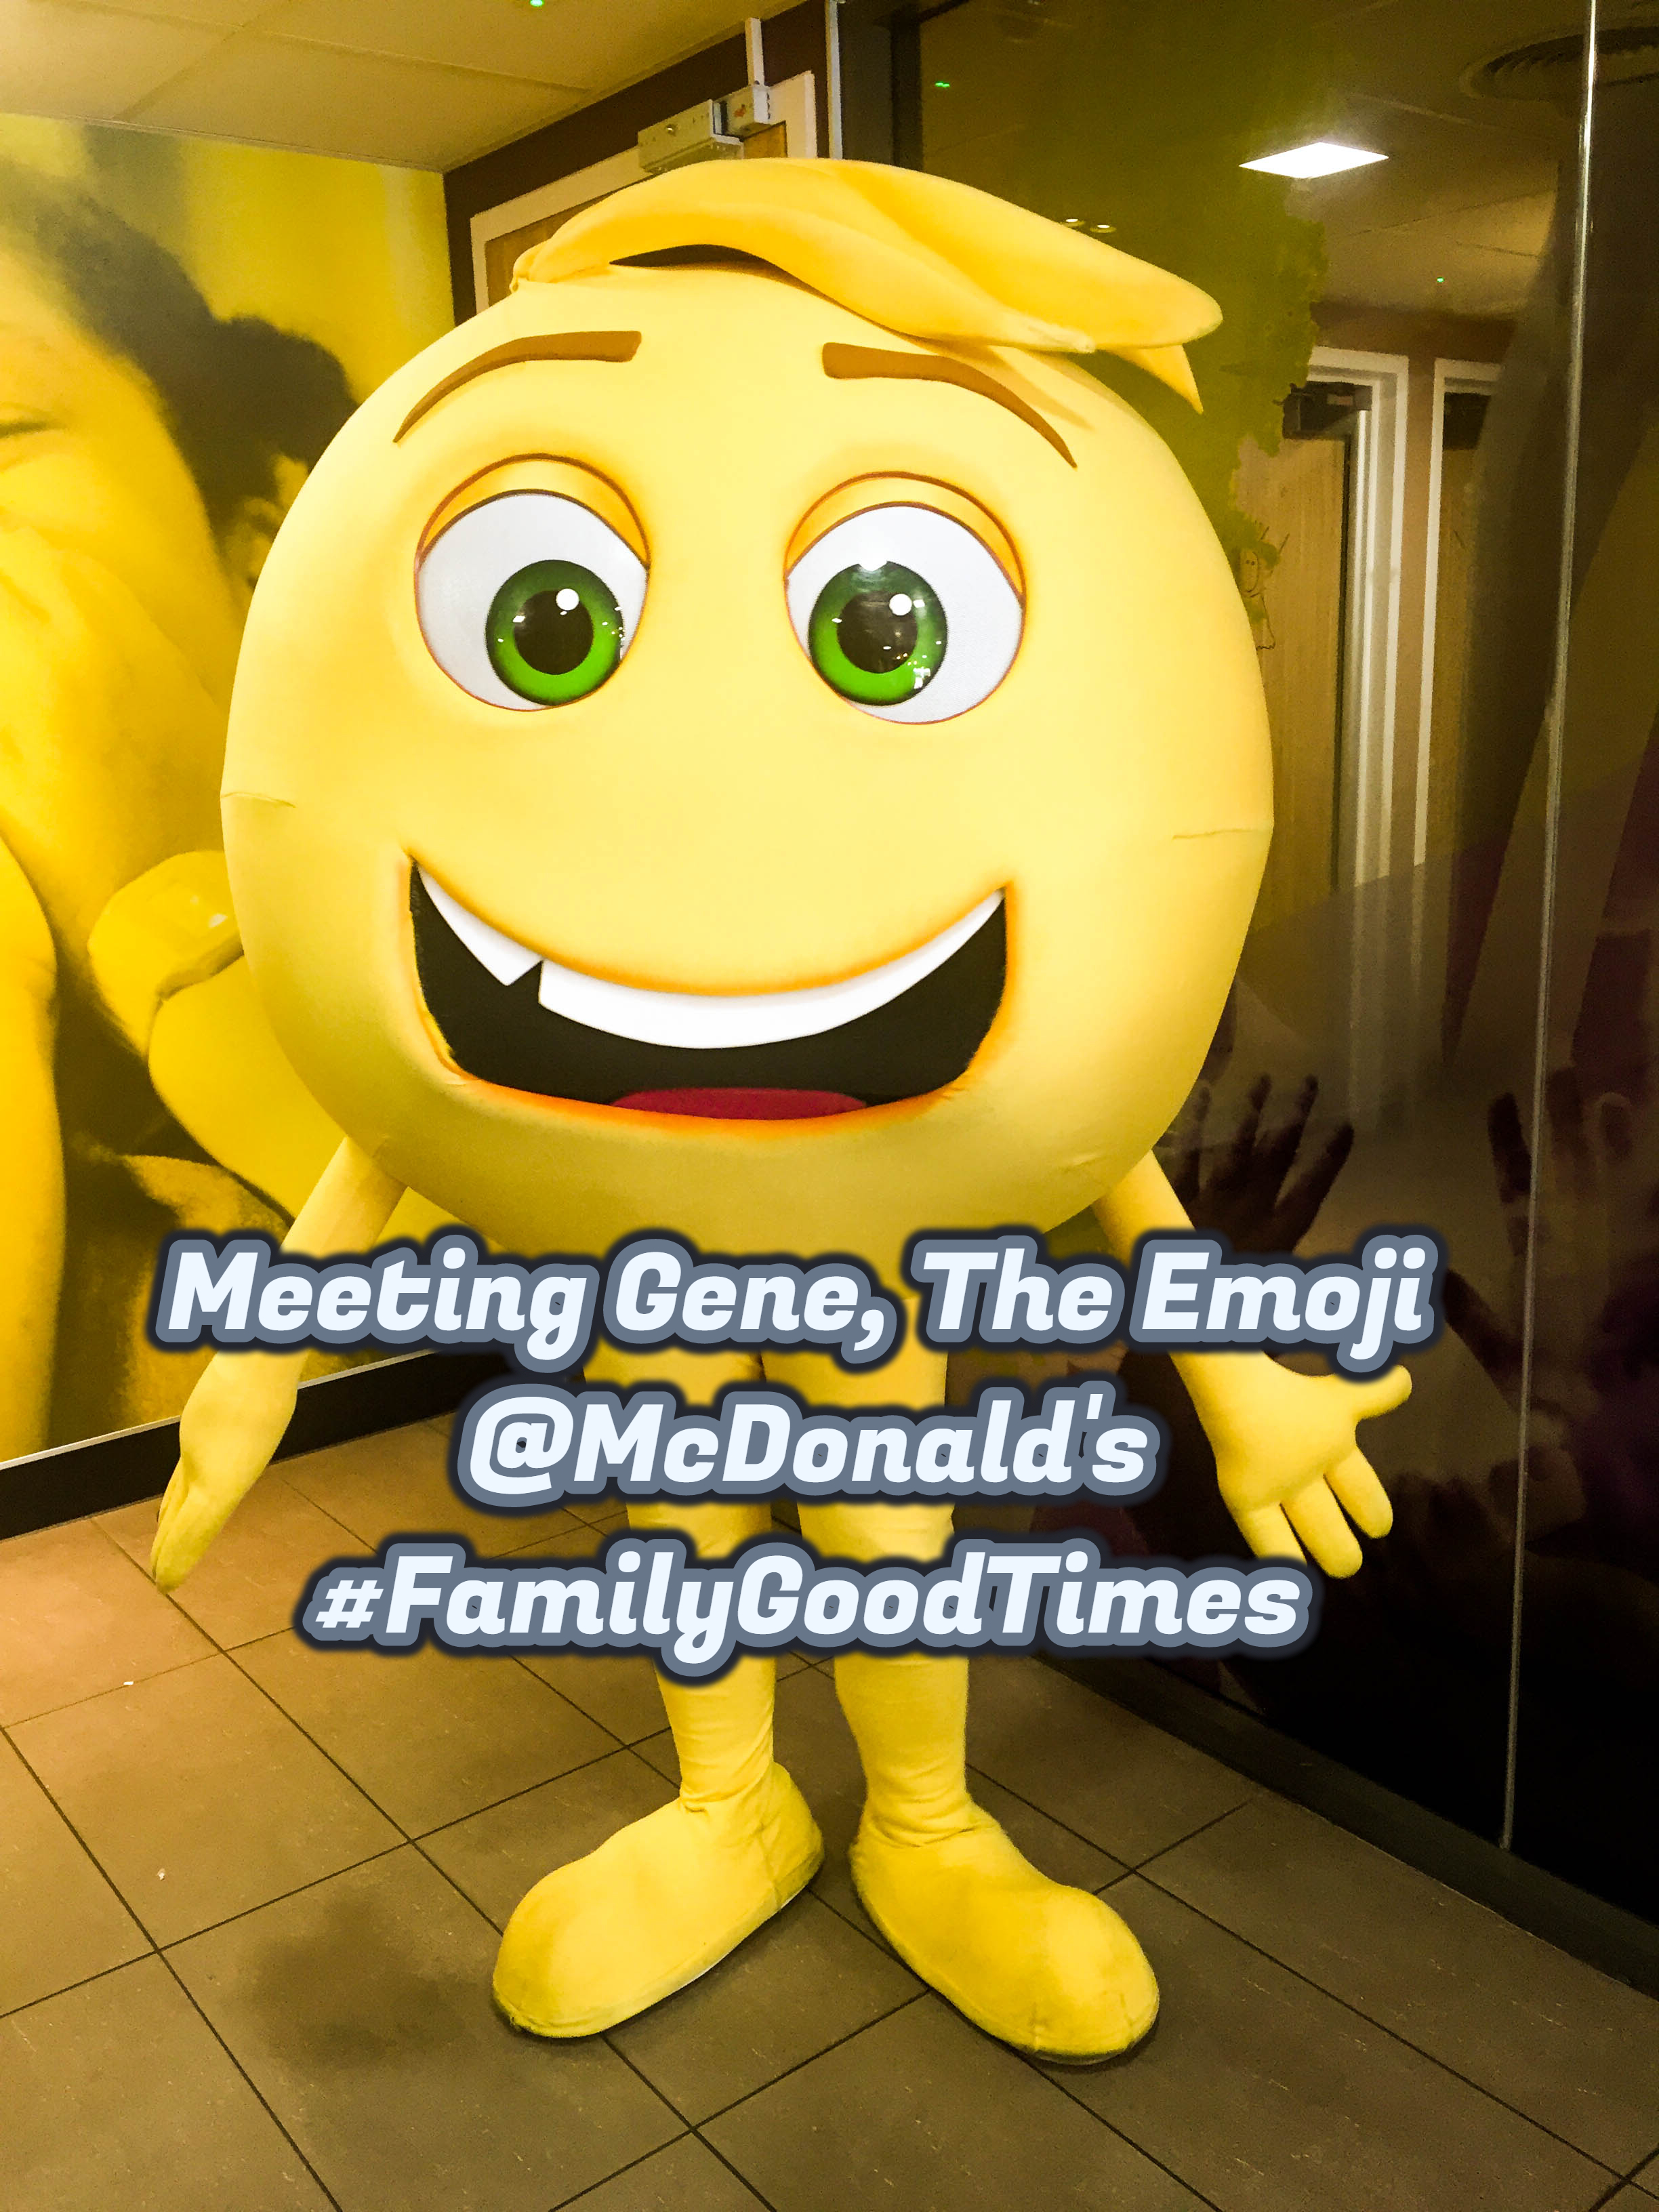 Meeting Gene, the Emoji at McDonald’s FamilyGoodTimes